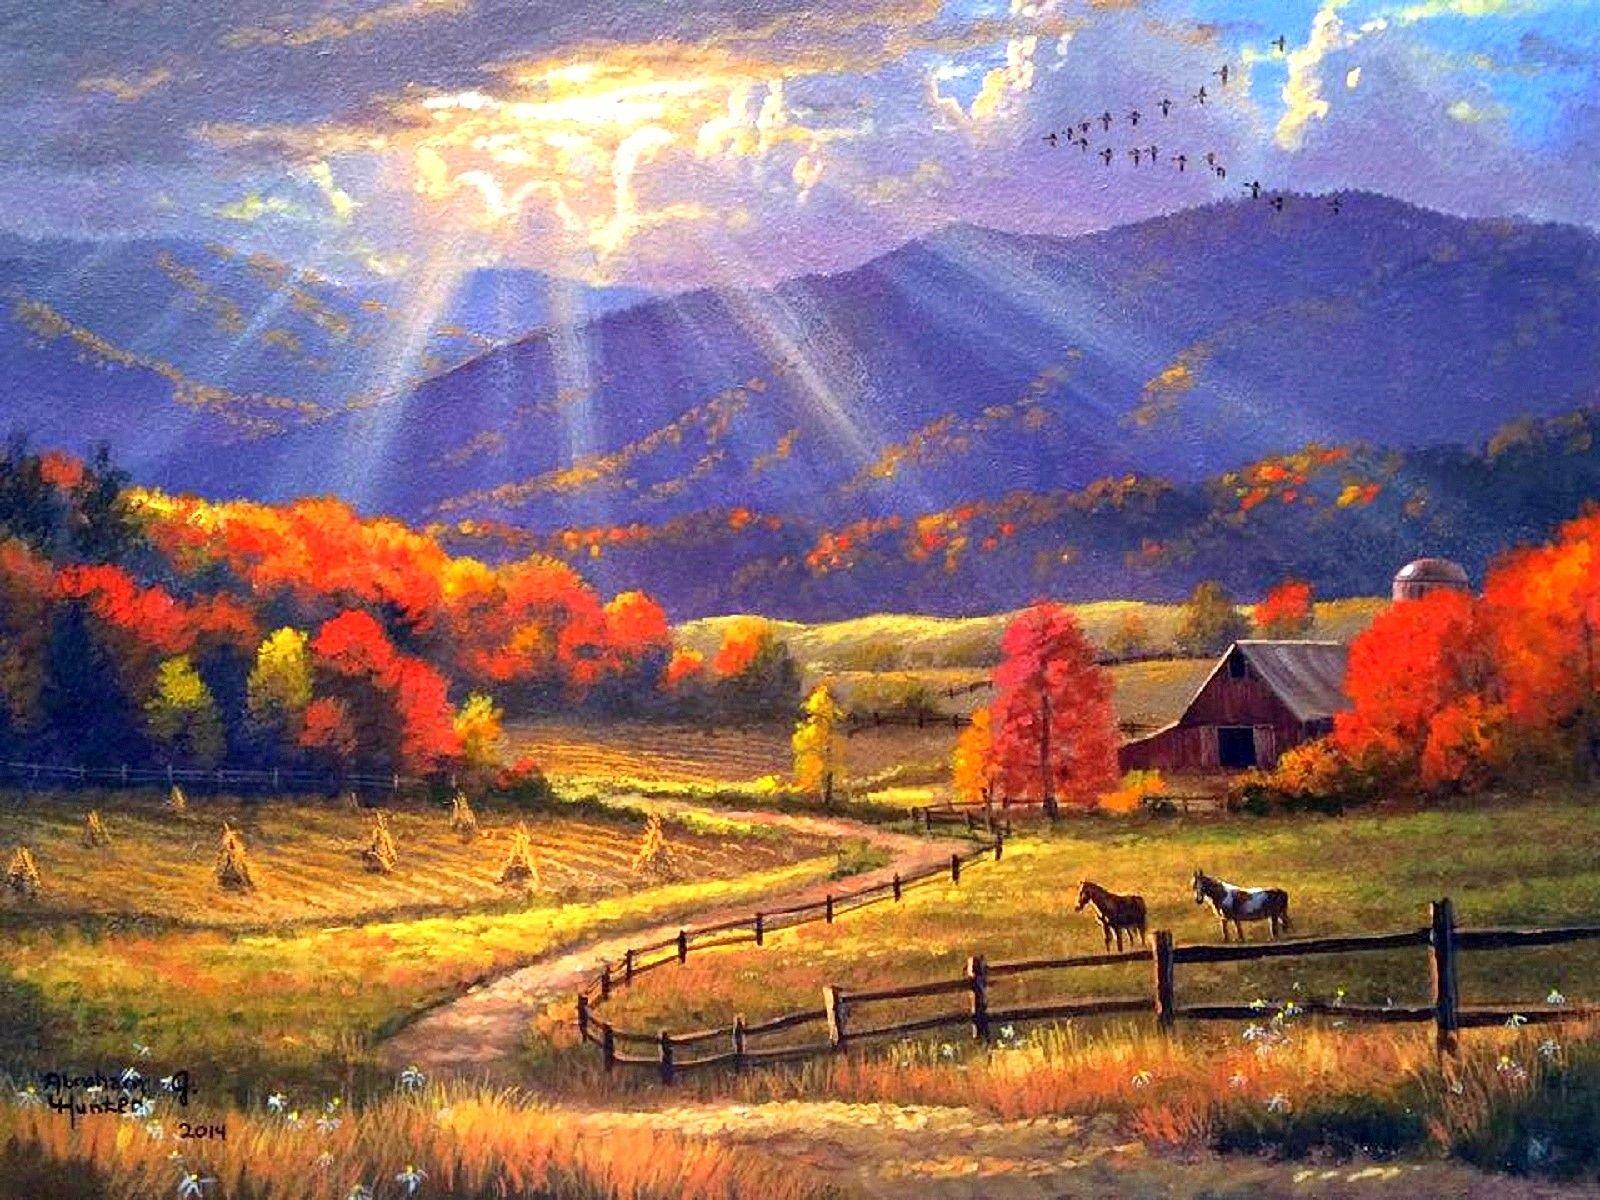 Mountain Mountains Paintings Love Flying Sunlight Nature Autumn